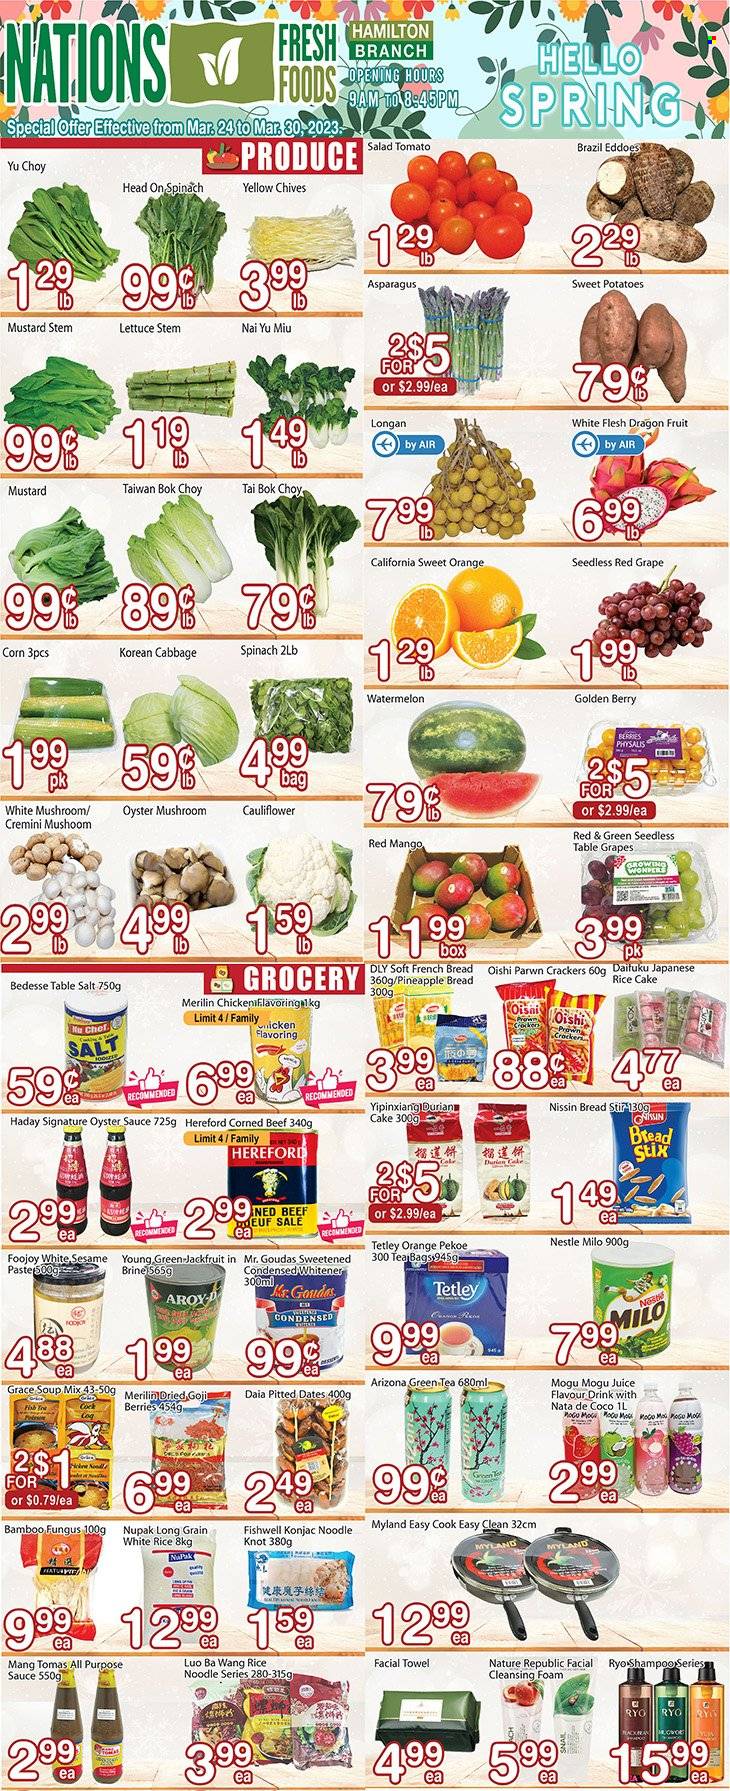 thumbnail - Circulaire Nations Fresh Foods - 24 Mars 2023 - 30 Mars 2023 - Produits soldés - asperge, Nestlé, crackers, sésame, goji, shampooing. Page 1.